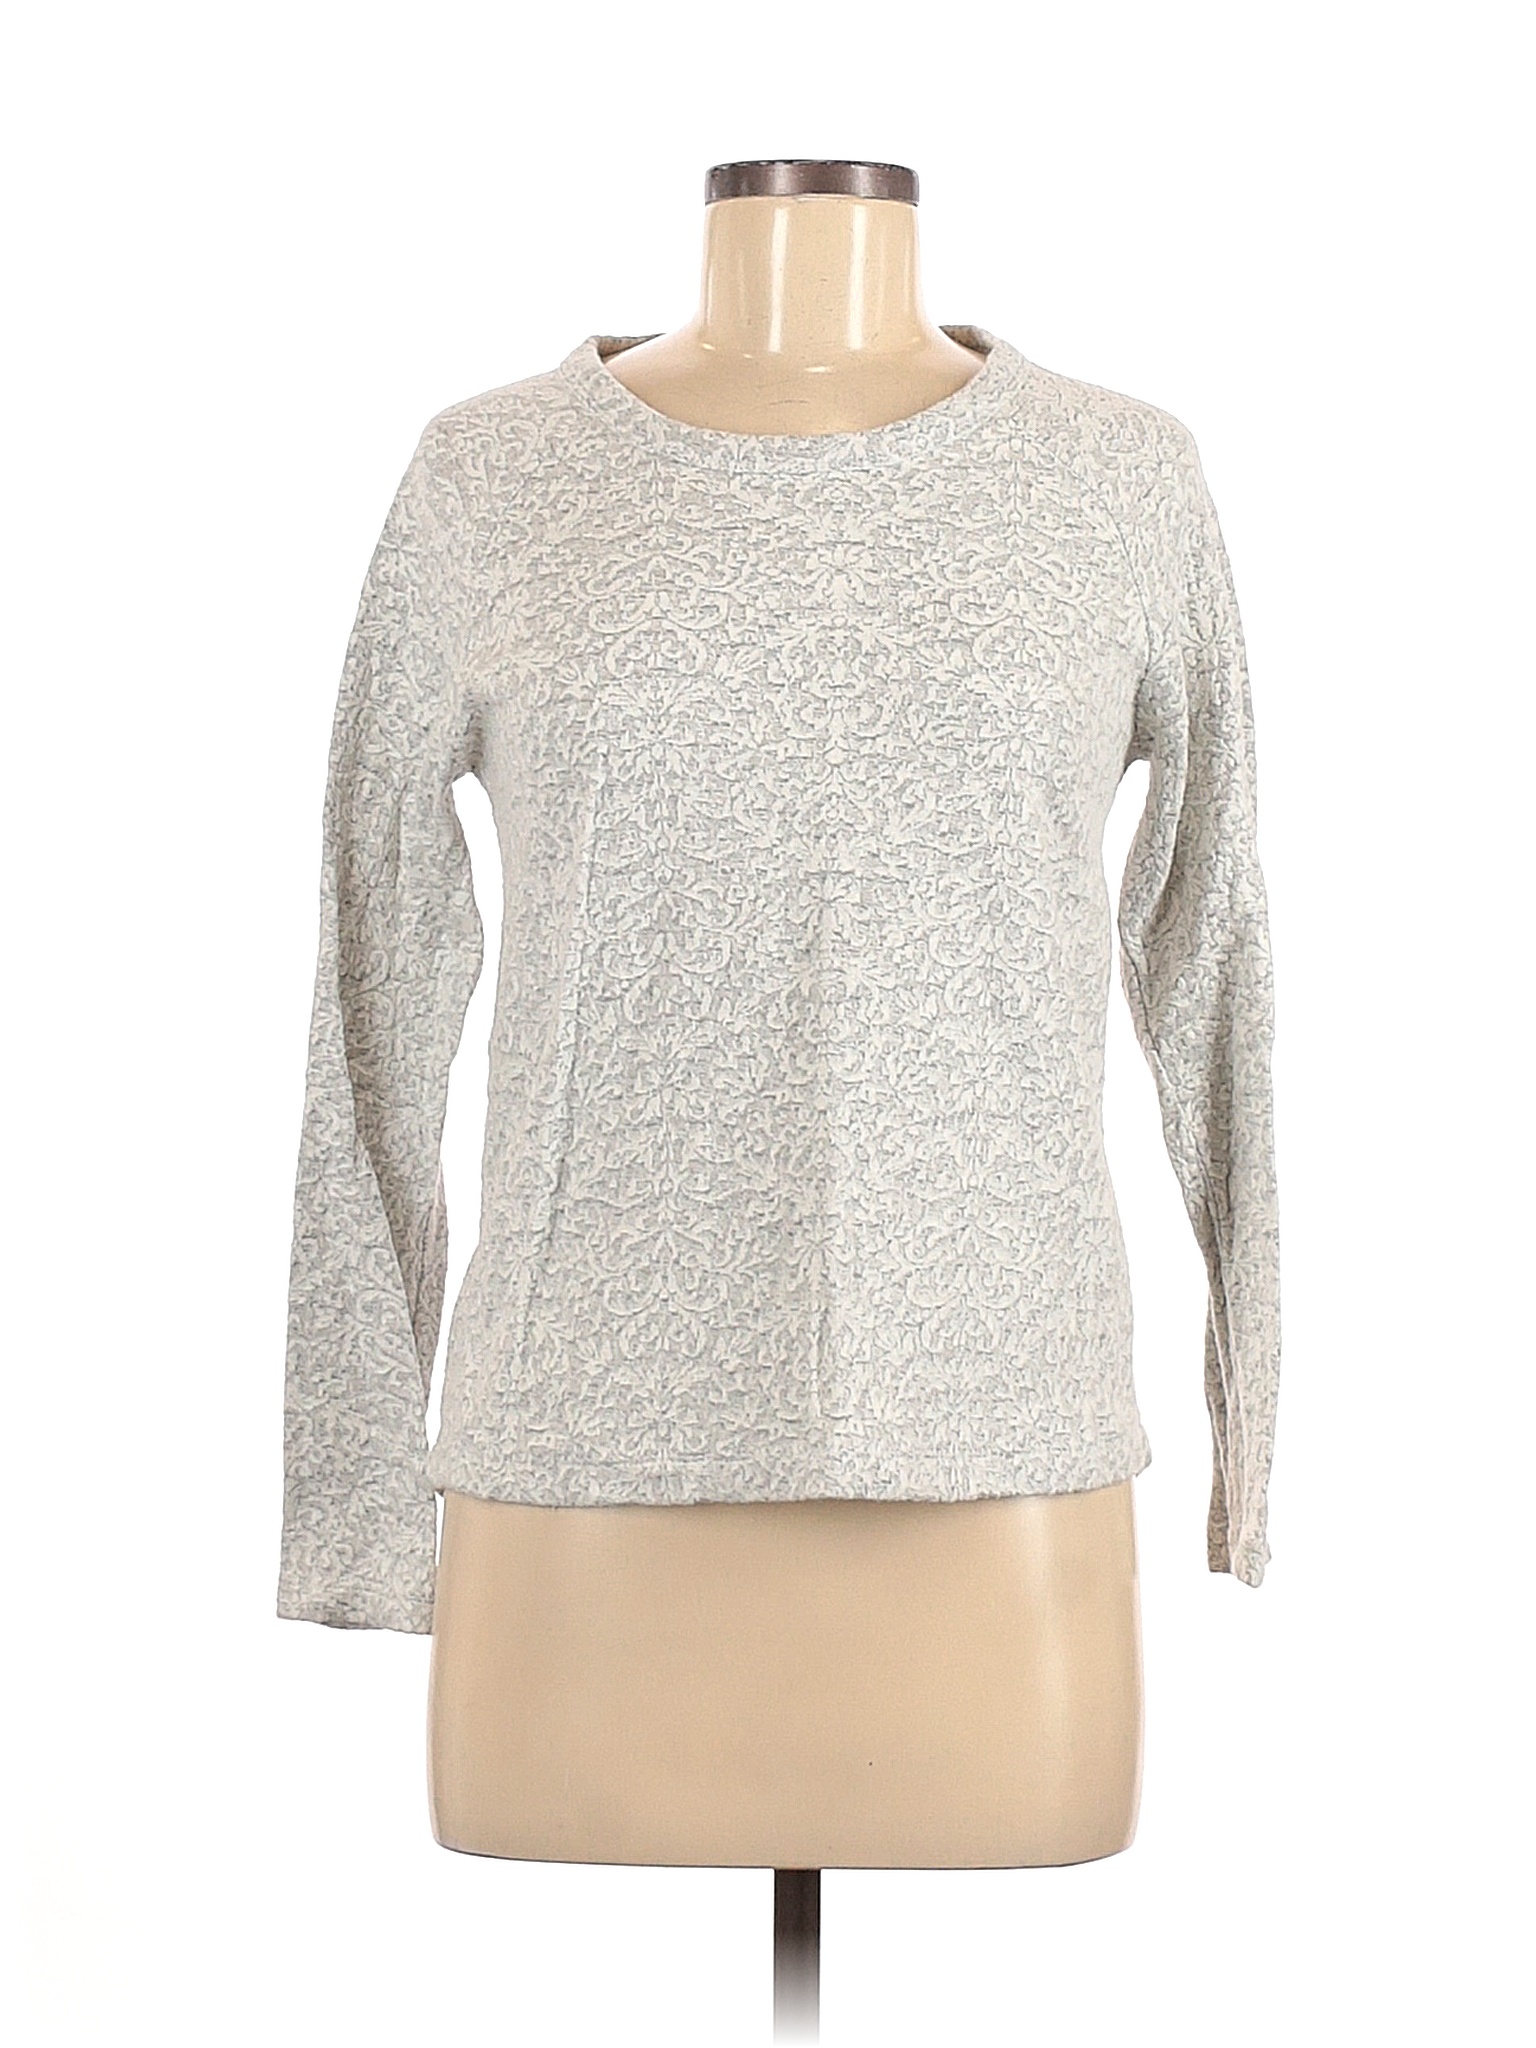 Jane and Delancey Color Block Gray Sweatshirt Size M - 81% off | thredUP